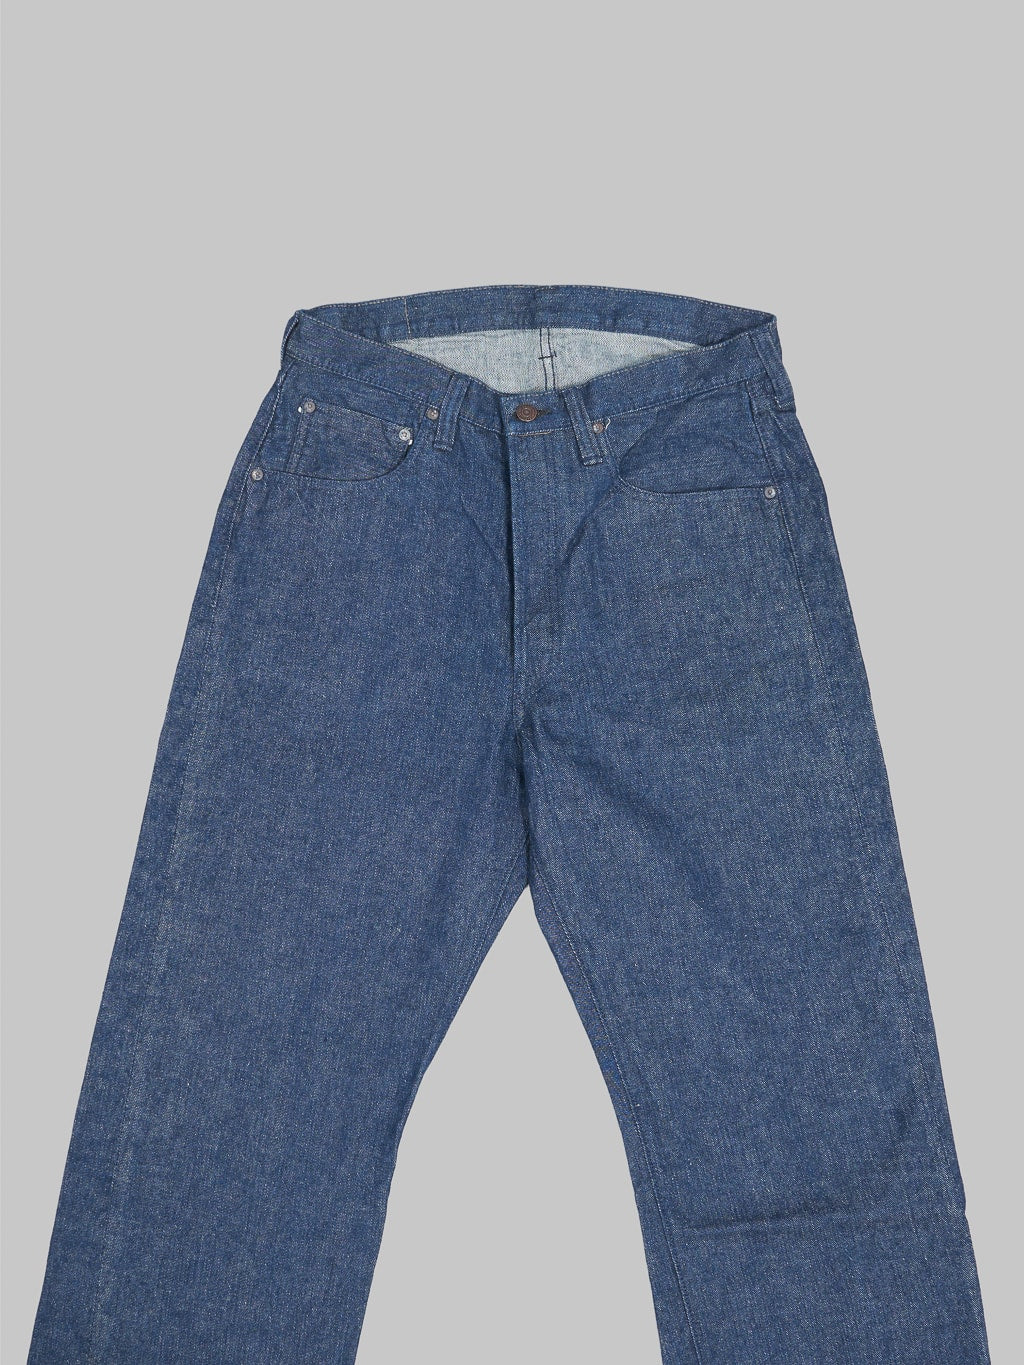 fullcount 1121 duke original selvedge denim super wide jeans front details